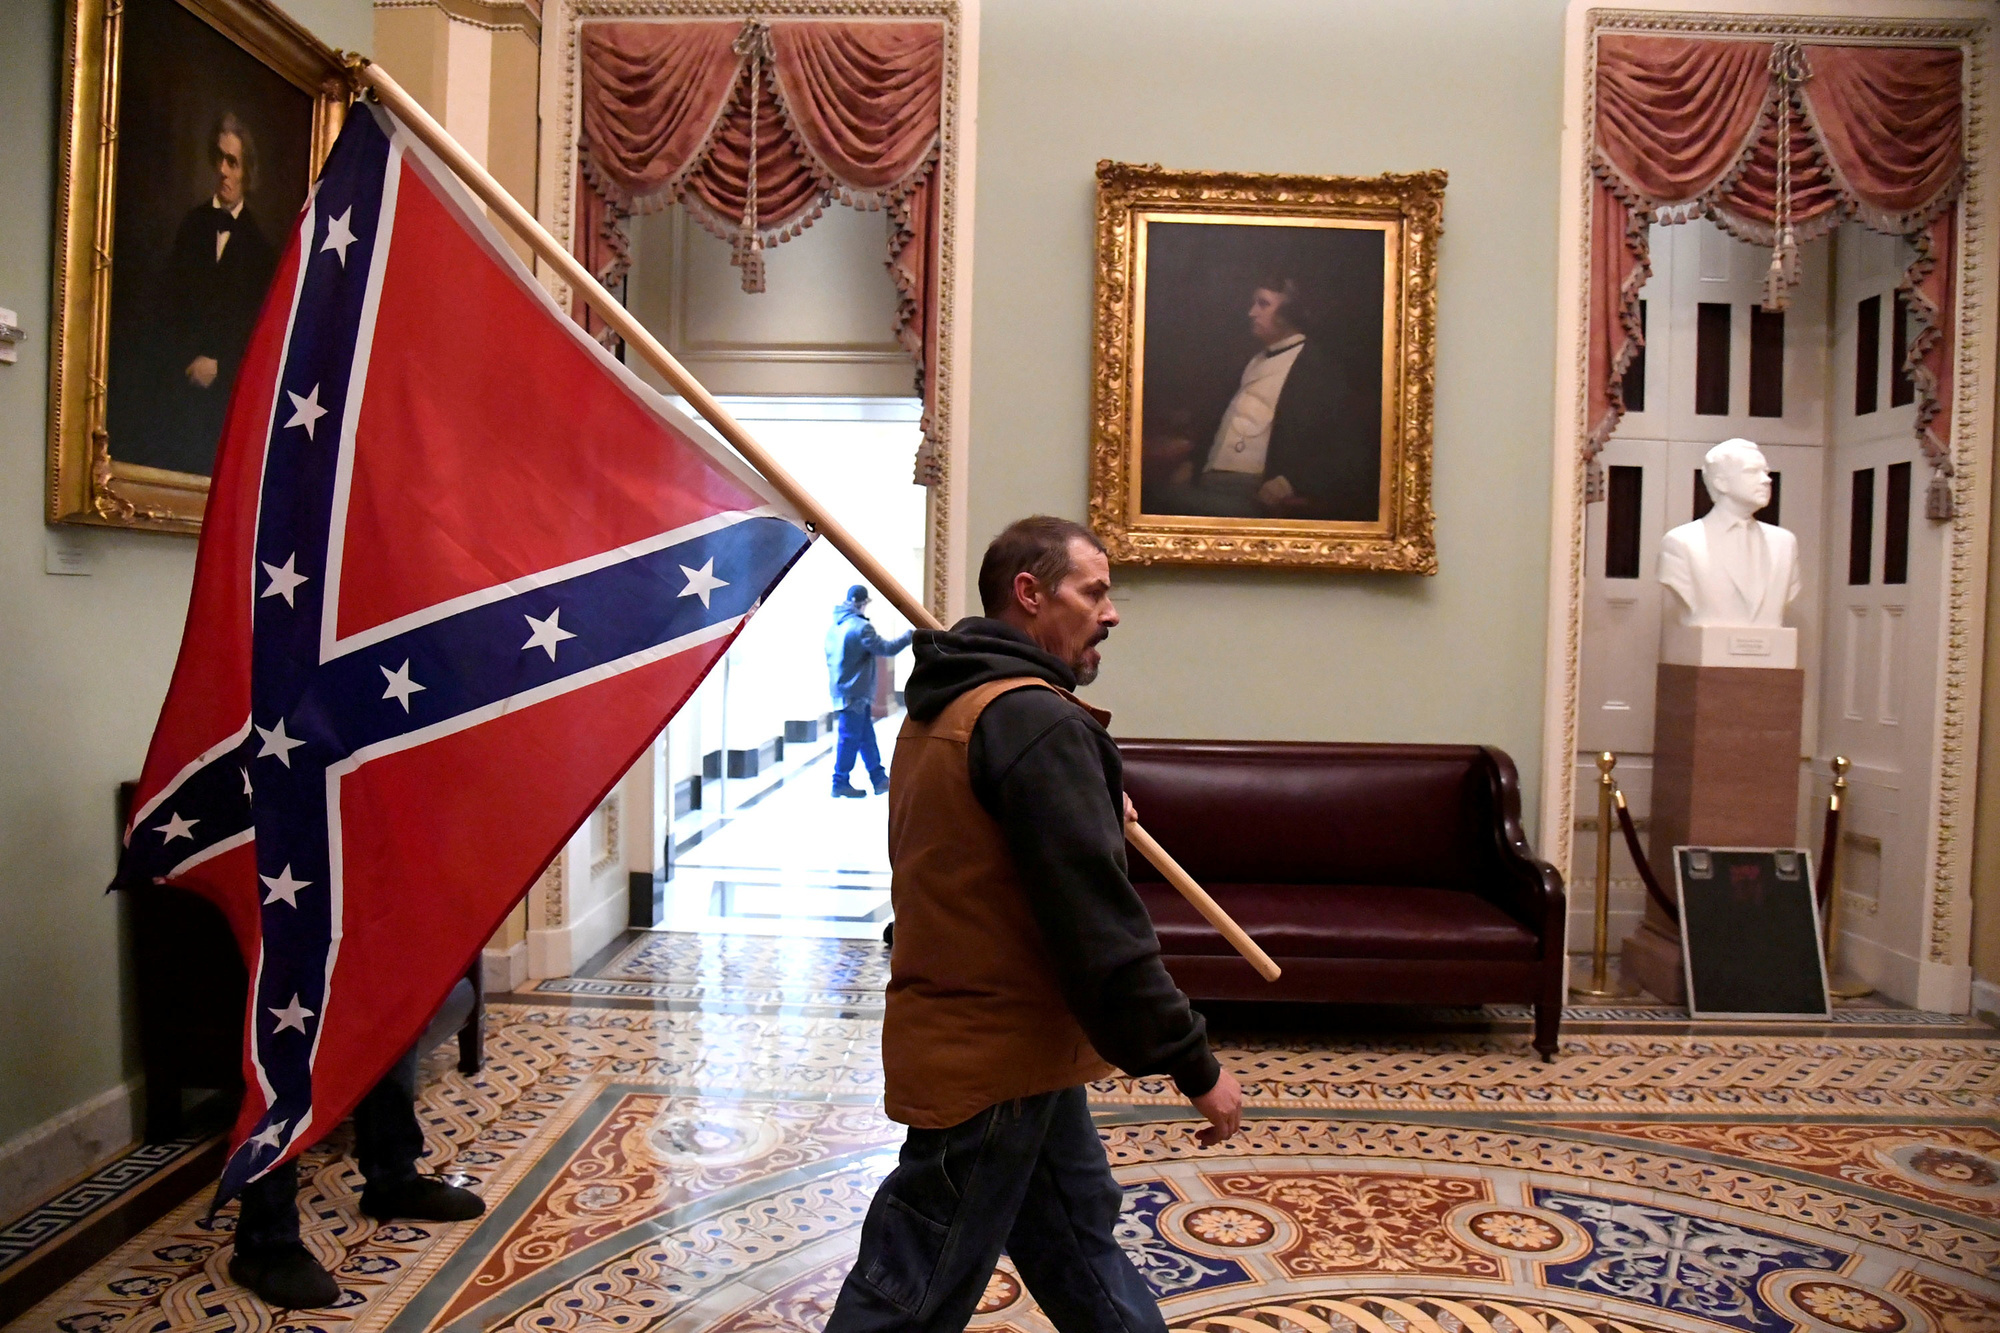 Man met de Confederale vlag (de vlag van de slavenstaten in de VS) op 6 januari, Reuters